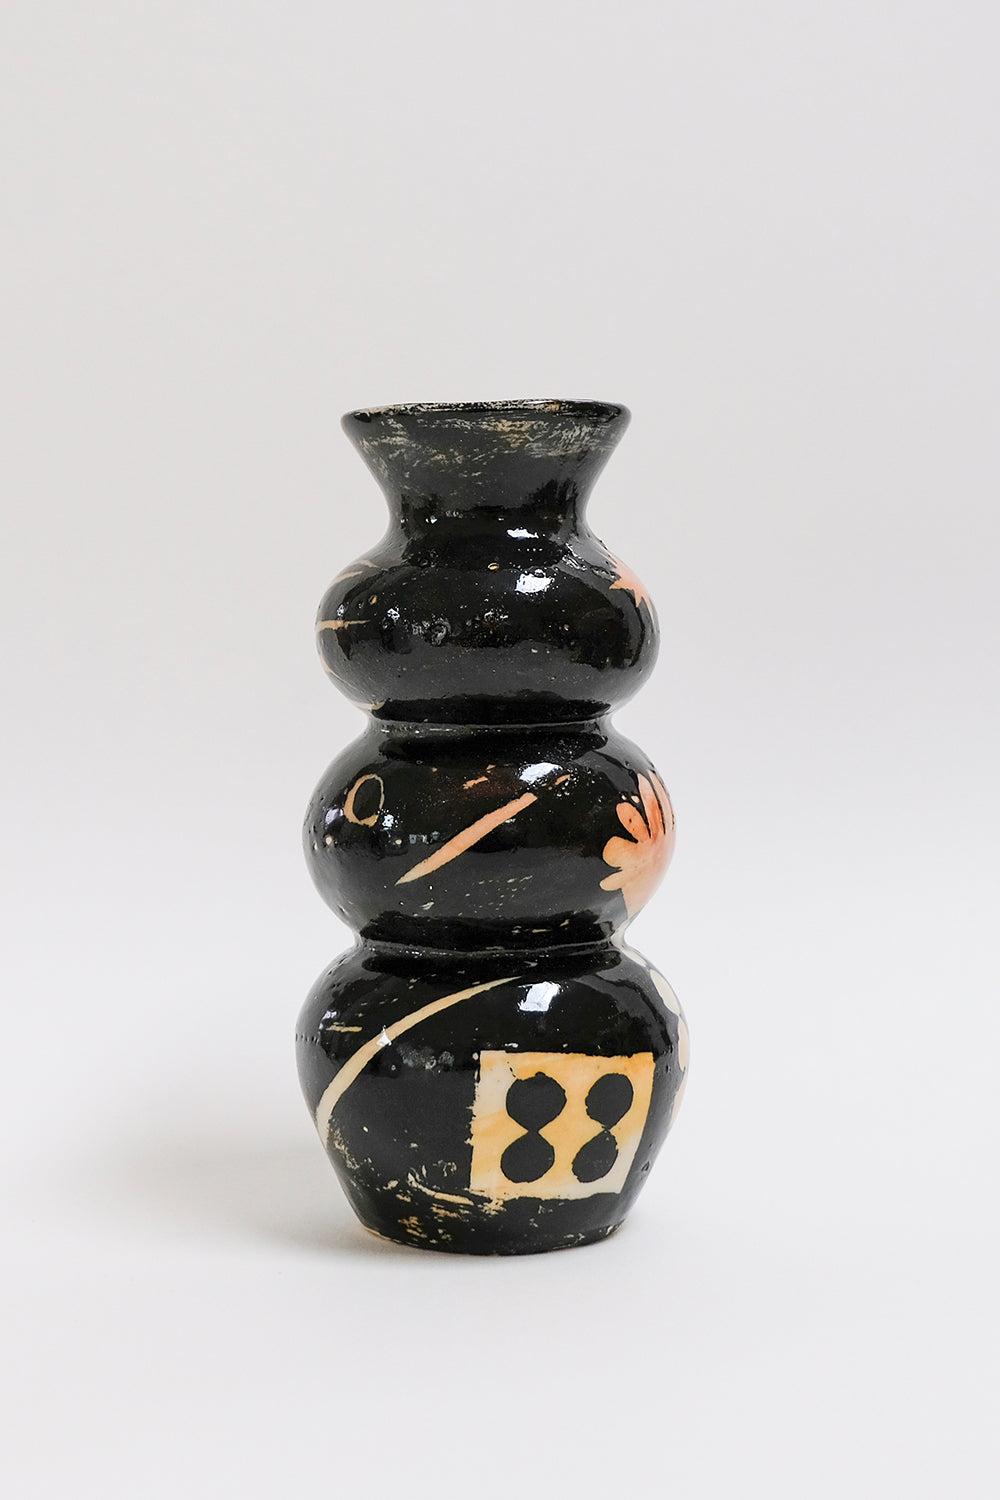 Mur Vessel 4 - contemporary ceramic functional art vase, wheel thrown hand built For Sale 2